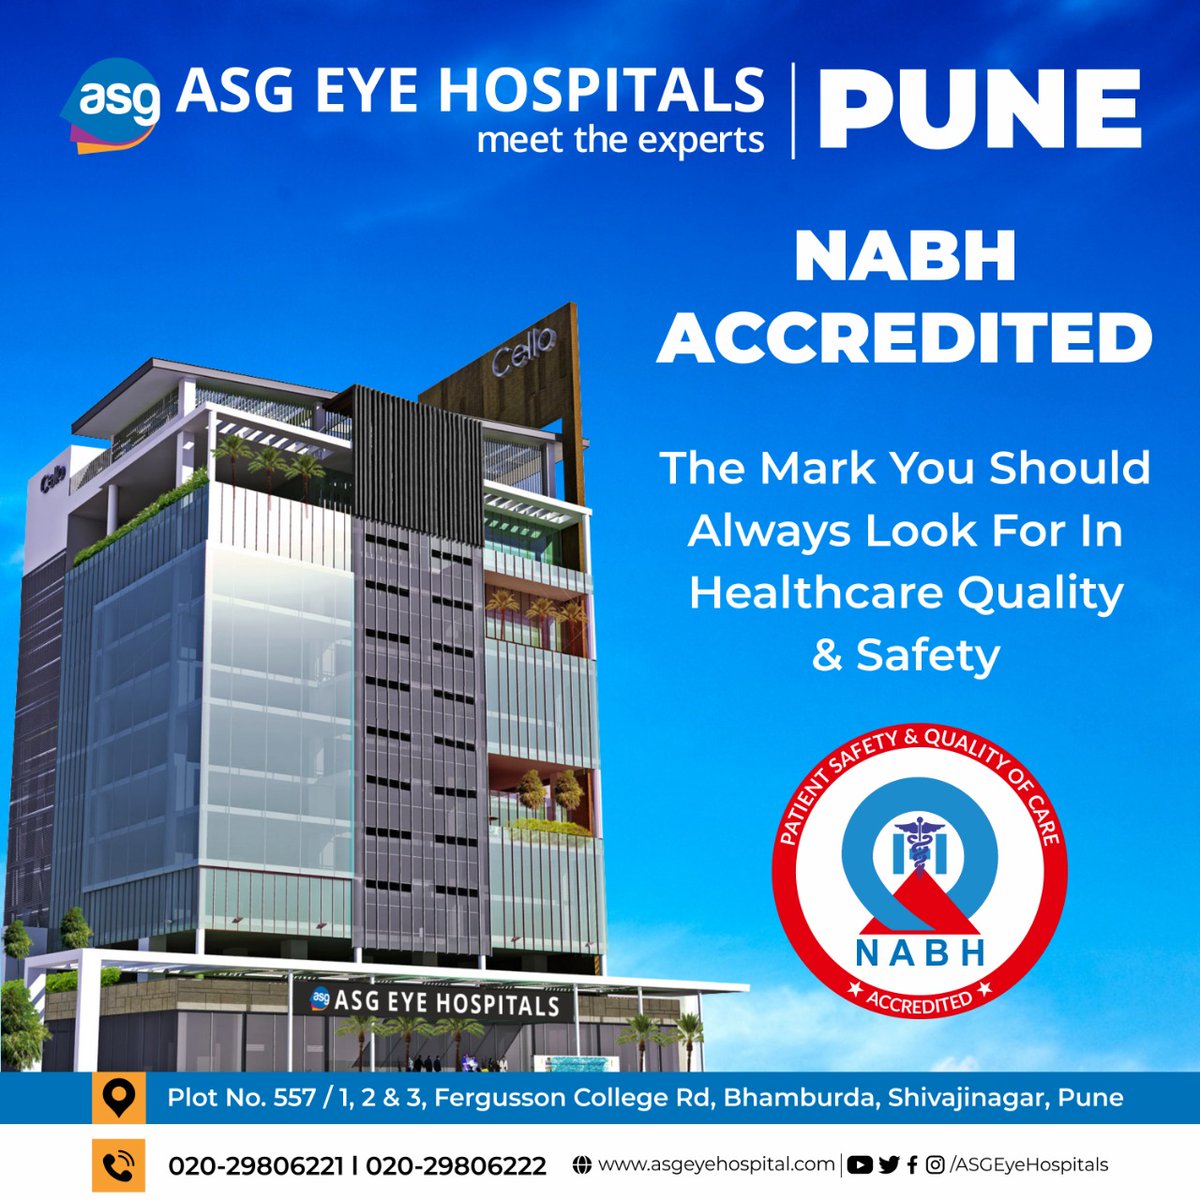 We are pleased to inform you that now ASG Eye Hospital Pune Center is NABH ACCREDITED.

#NABH #nabhaccreditation #NABHAccredited #ASG #NABHCertified #ASGpune  #besteyecare #EyeHospital #EyeHospitalIndia #CareWithExperience #TotalEyeCareSolution #besteyecarehospital